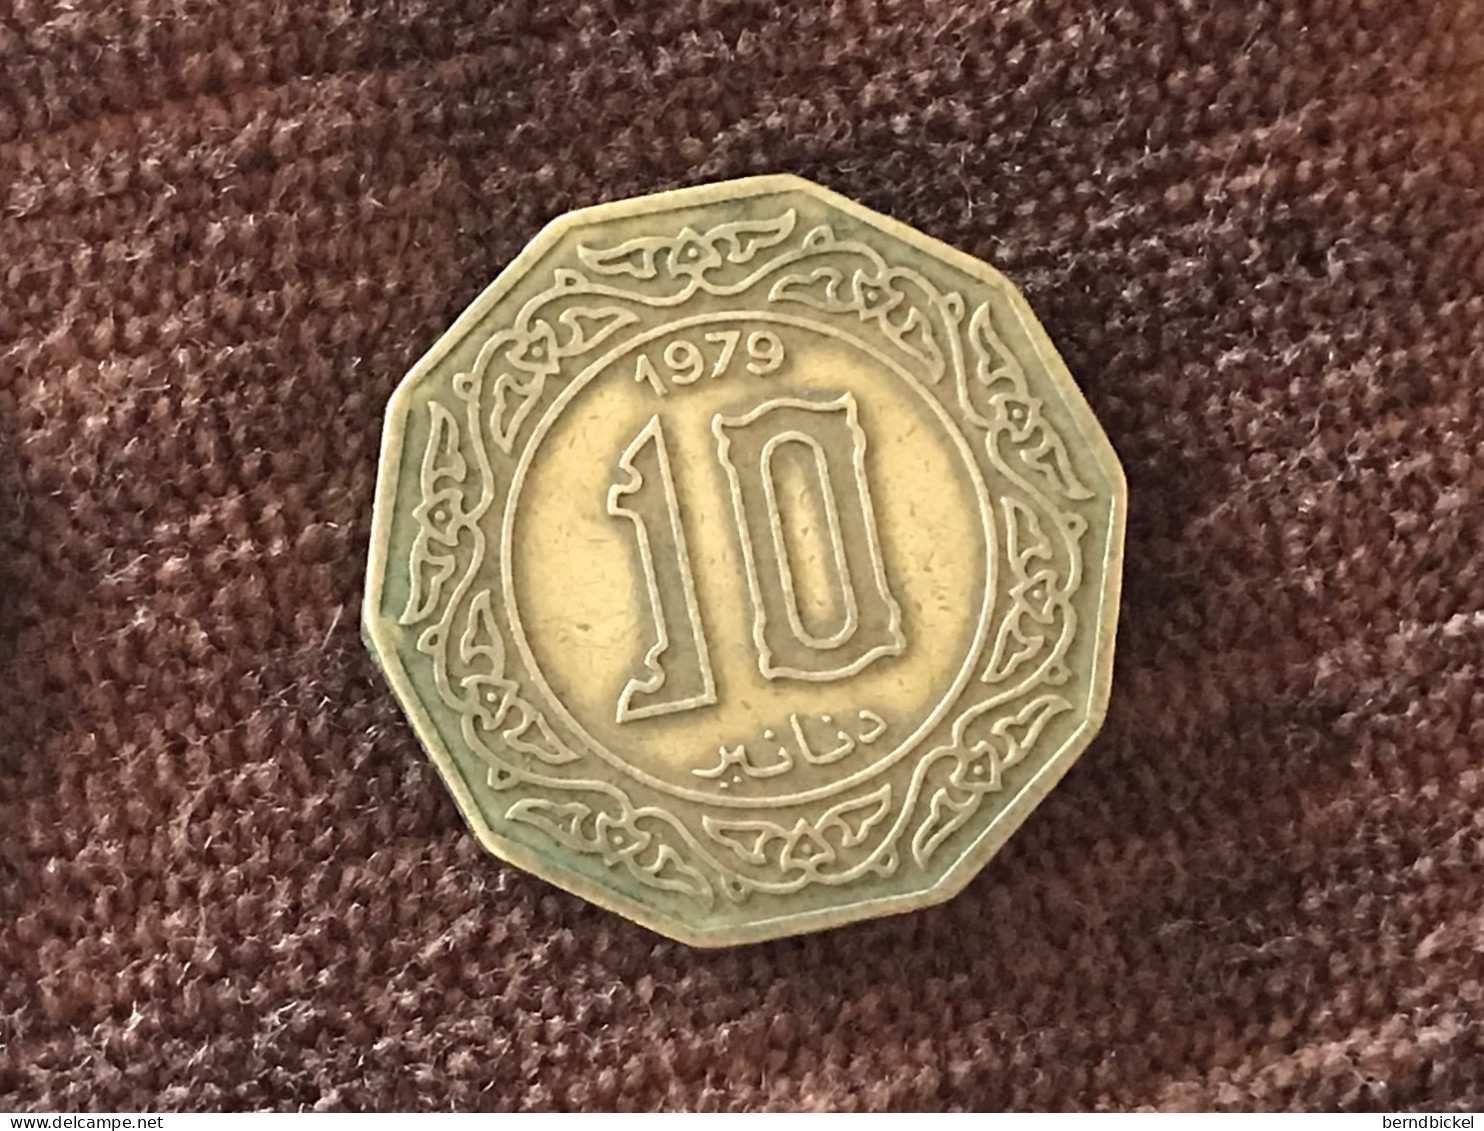 Münze Münzen Umlaufmünze Algerien 10 Dinar 1979 - Algeria